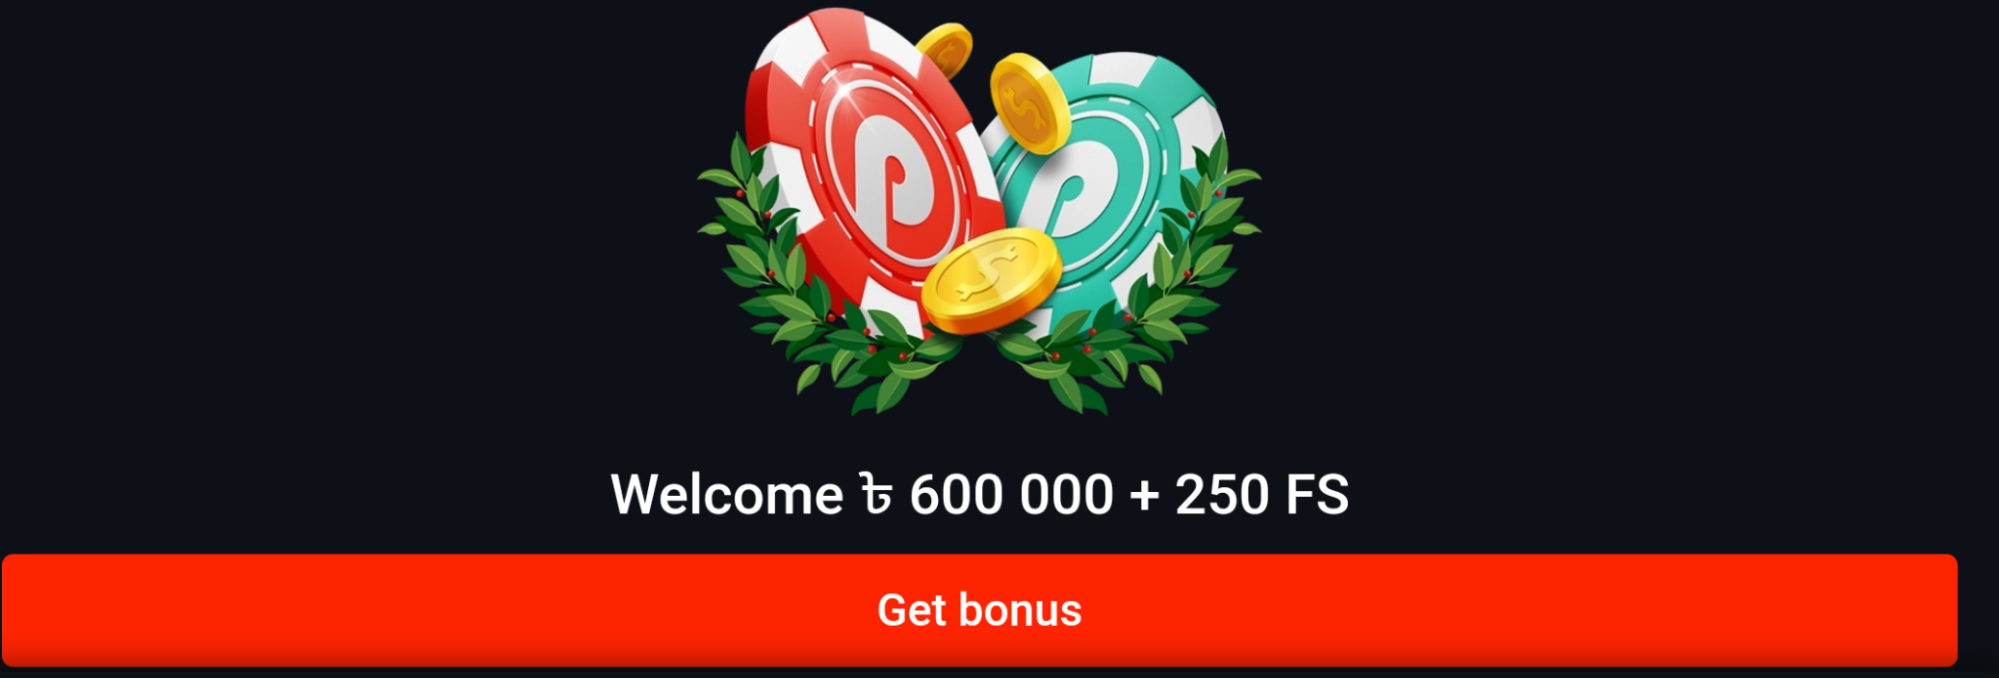 Pin Up BD Casino Welcome Bonus